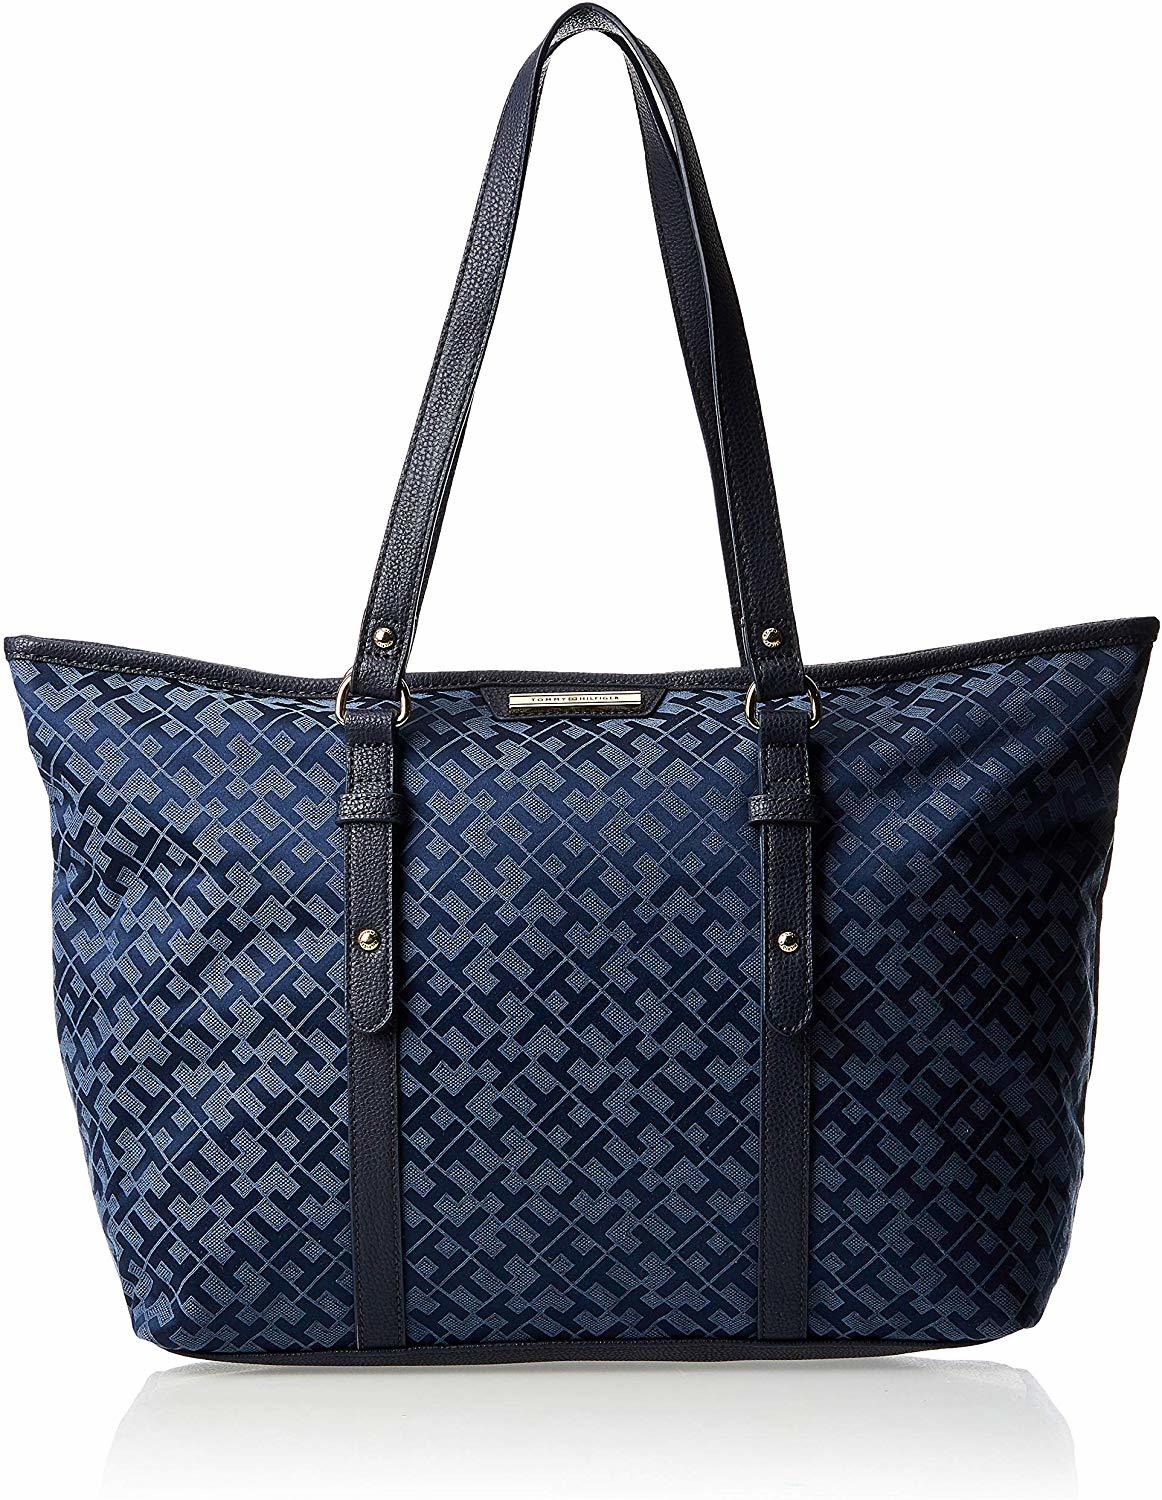 Women's Tote Bag, Navy Blue Online 